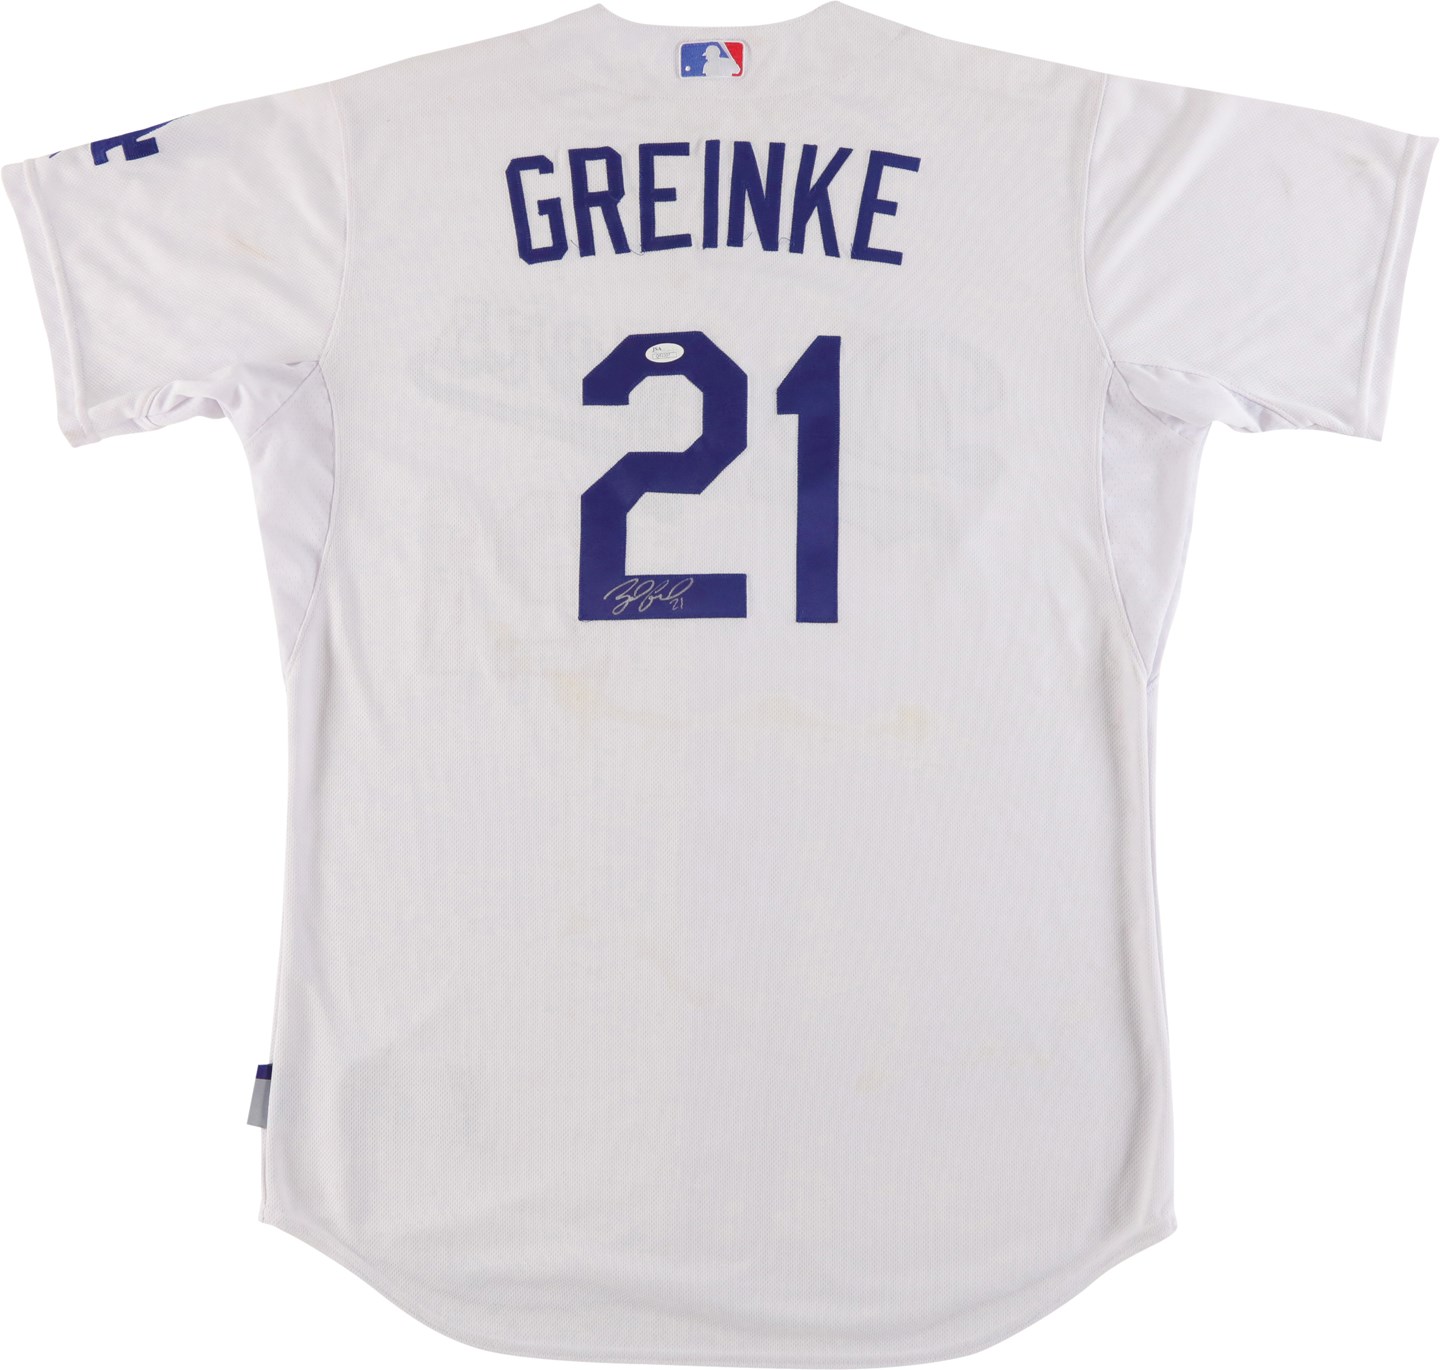 - 2015 Zack Greinke Los Angeles Dodgers Signed Game Worn Jersey